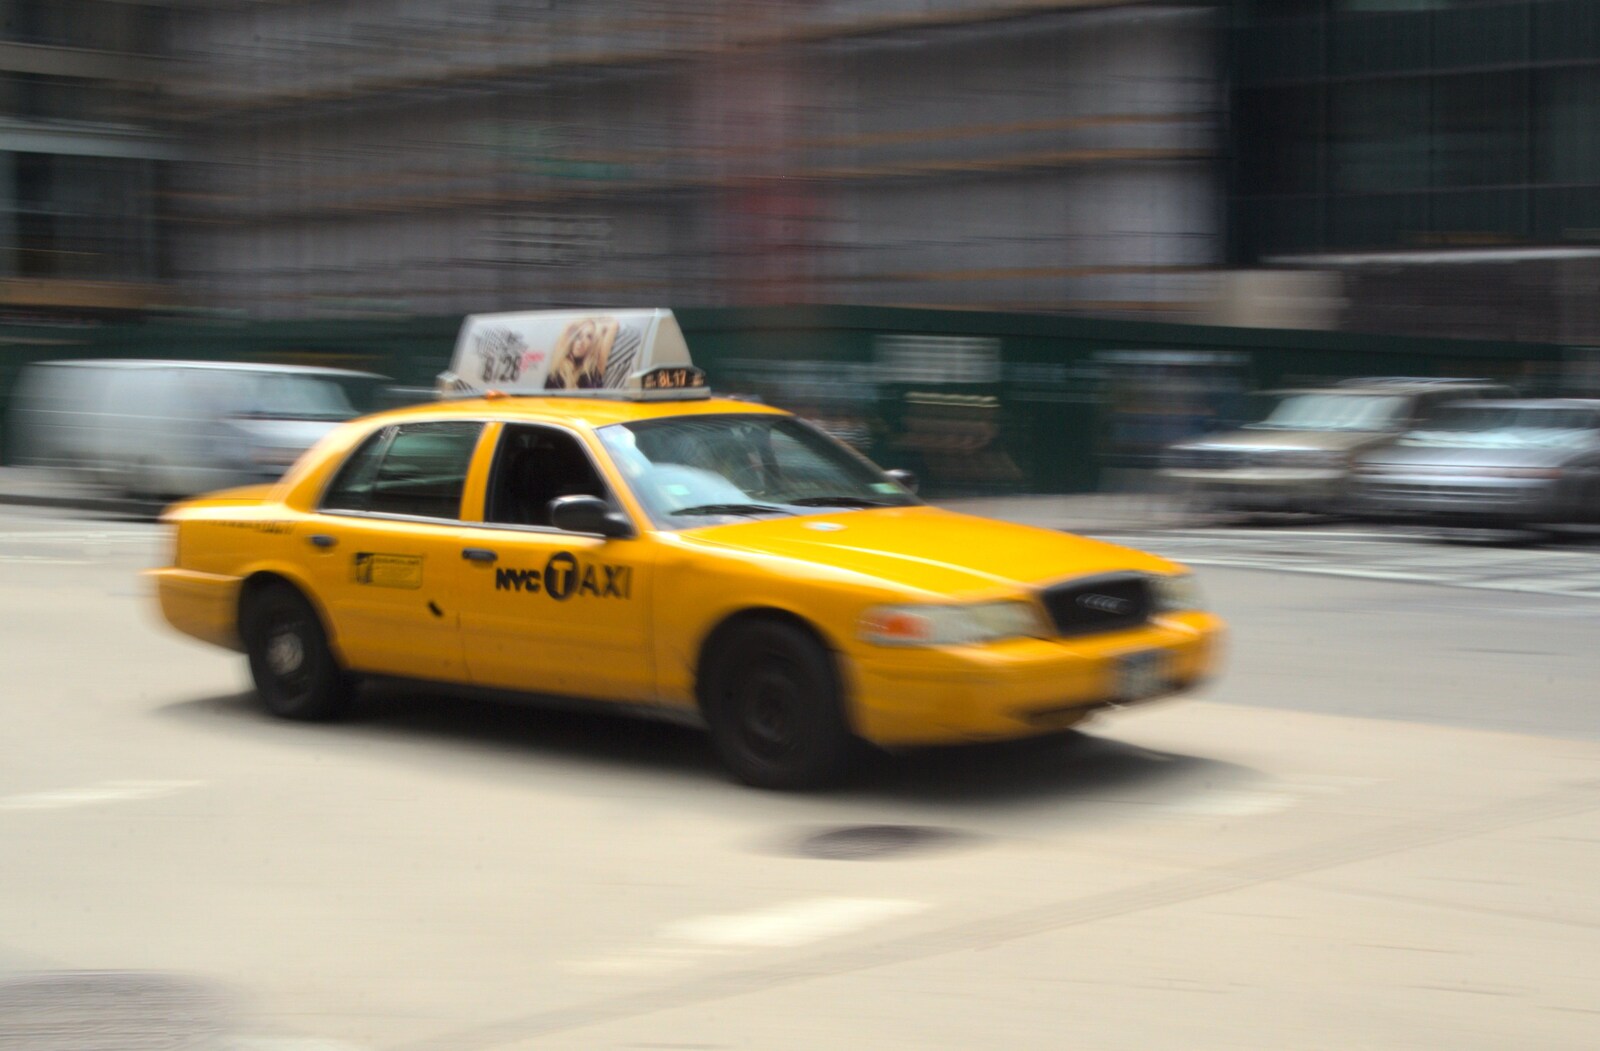 A New York cab steams across an intersection from A Manhattan Hotdog, New York, USA - 21st August 2011